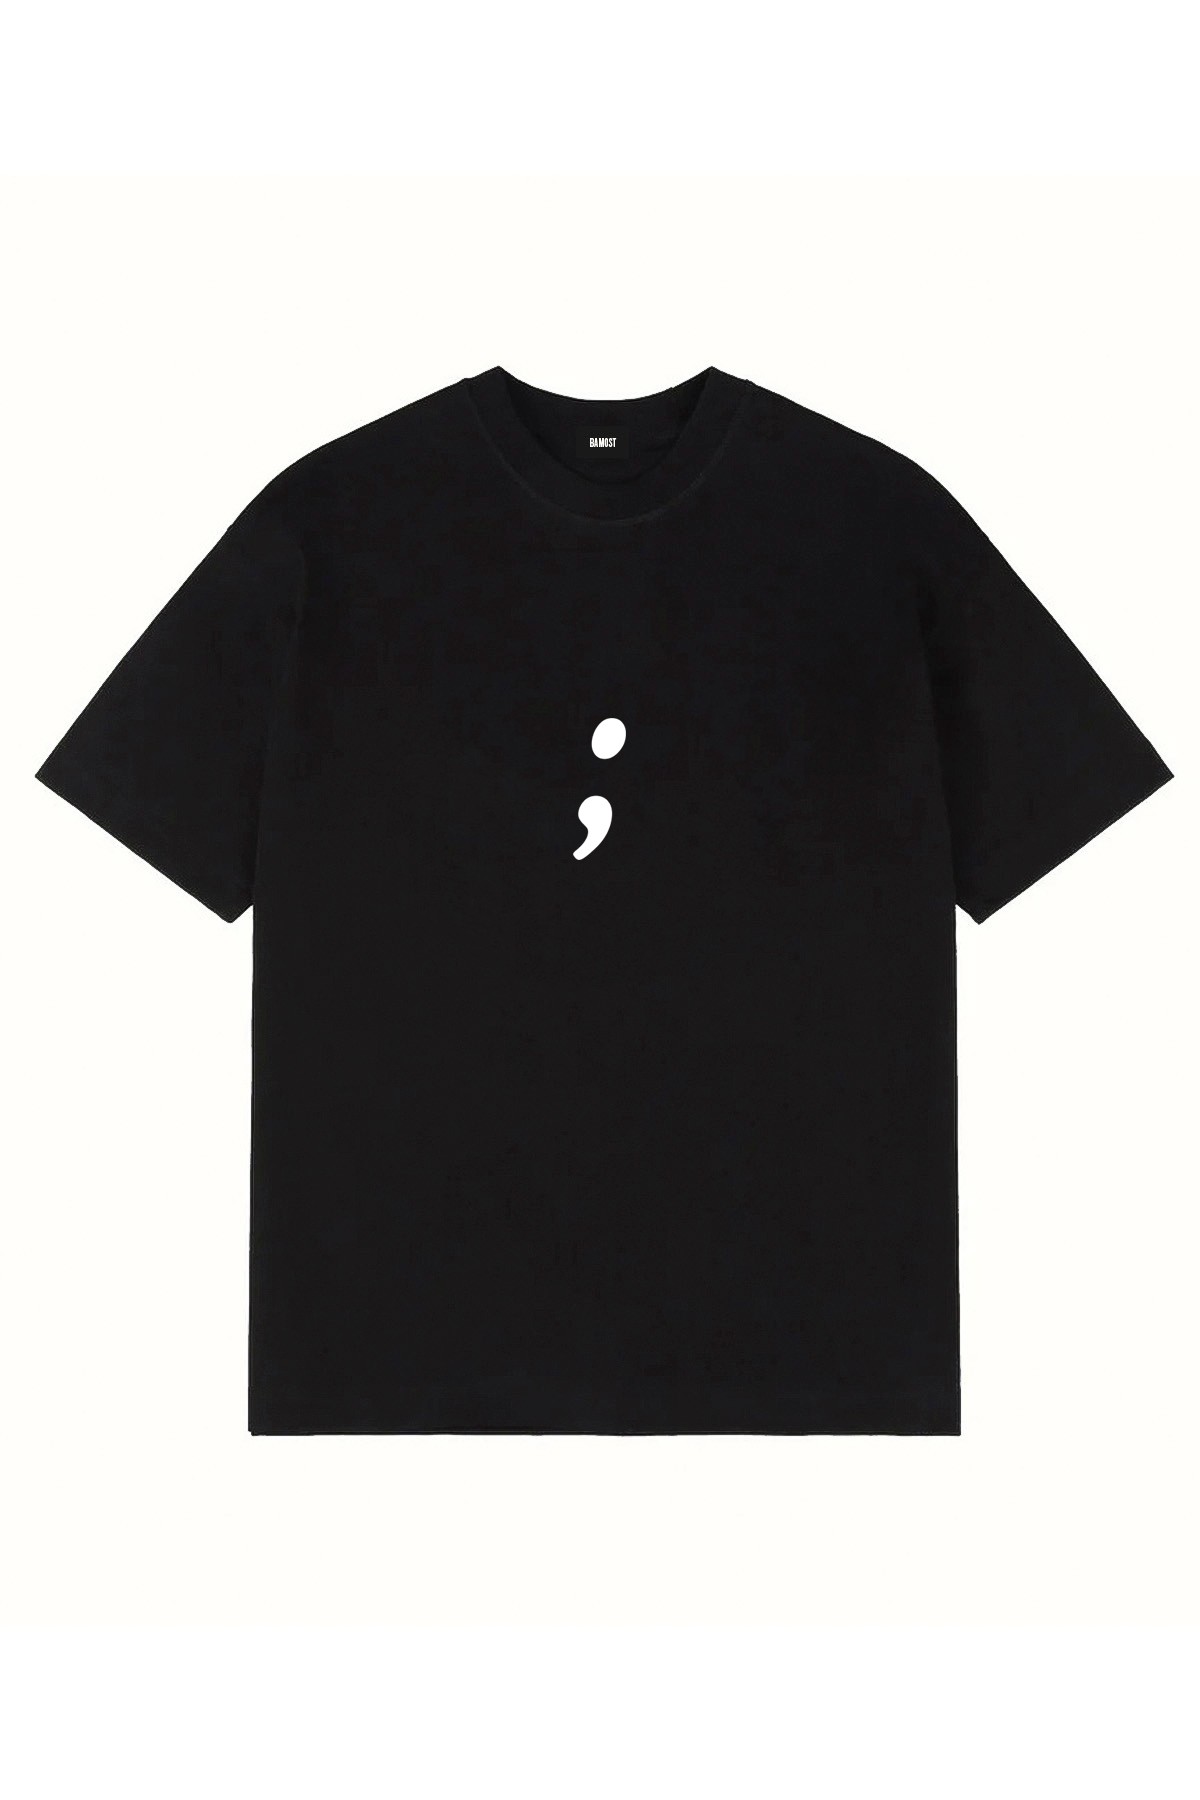 2018 - Oversize Printed T-Shirt - BLACK